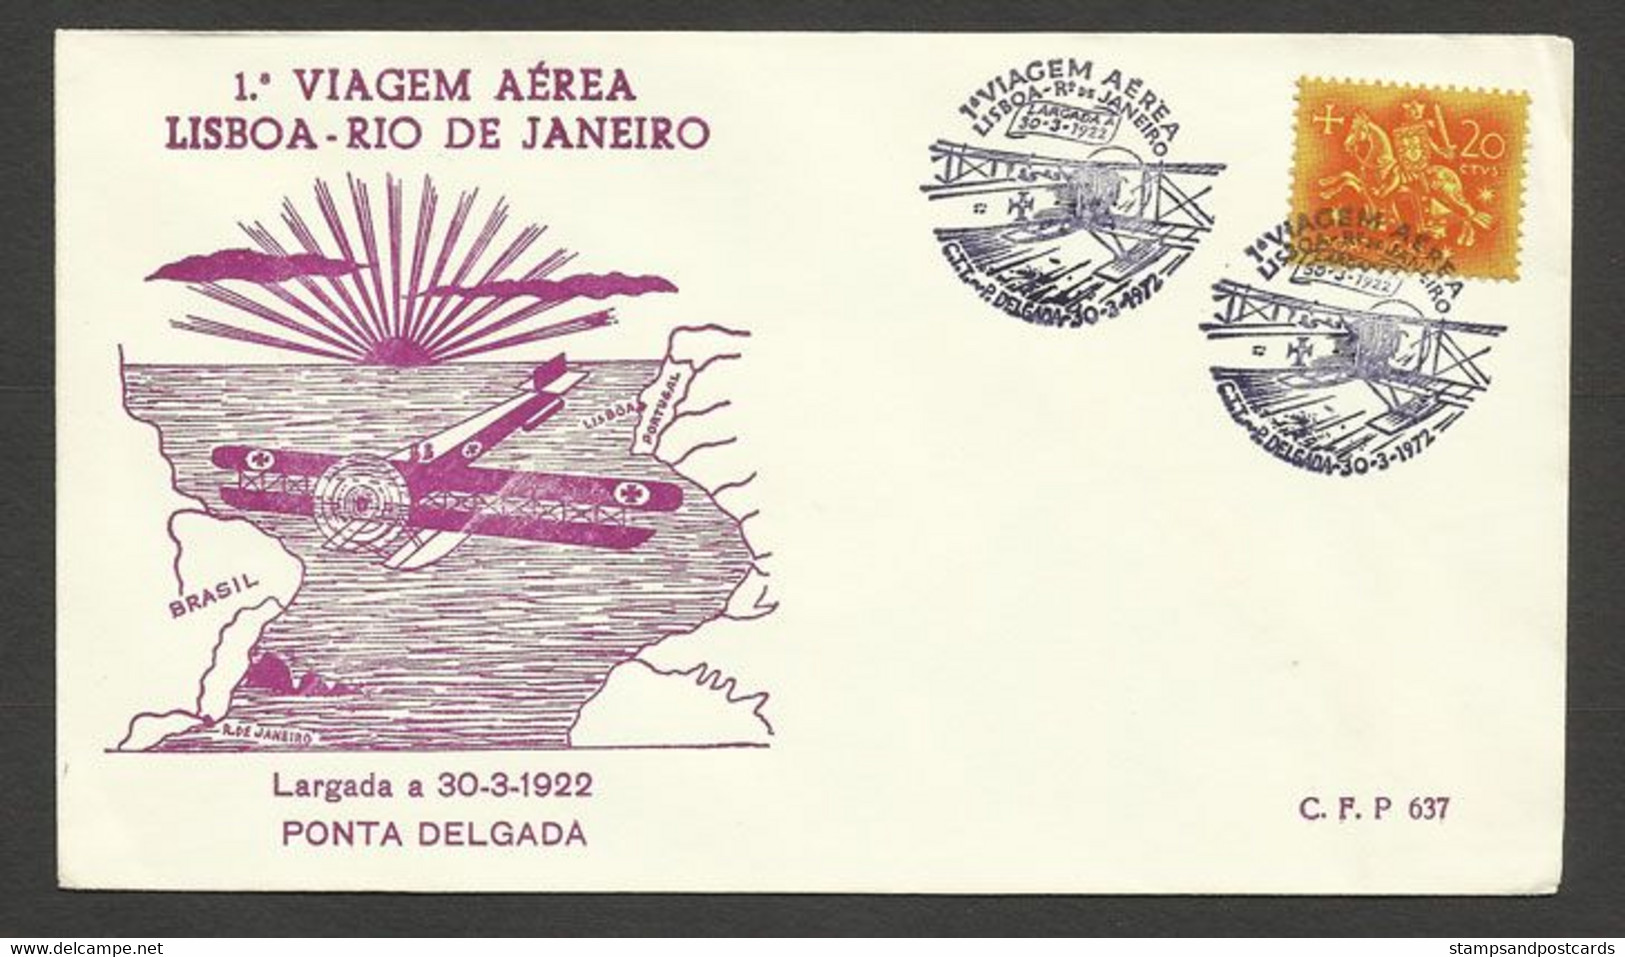 Portugal 50 Ans 1º Traversée Par Avion Atlantique Sud Gago Coutinho Cachet Commemoratif Ponta Delgada Açores Azores 1972 - Flammes & Oblitérations